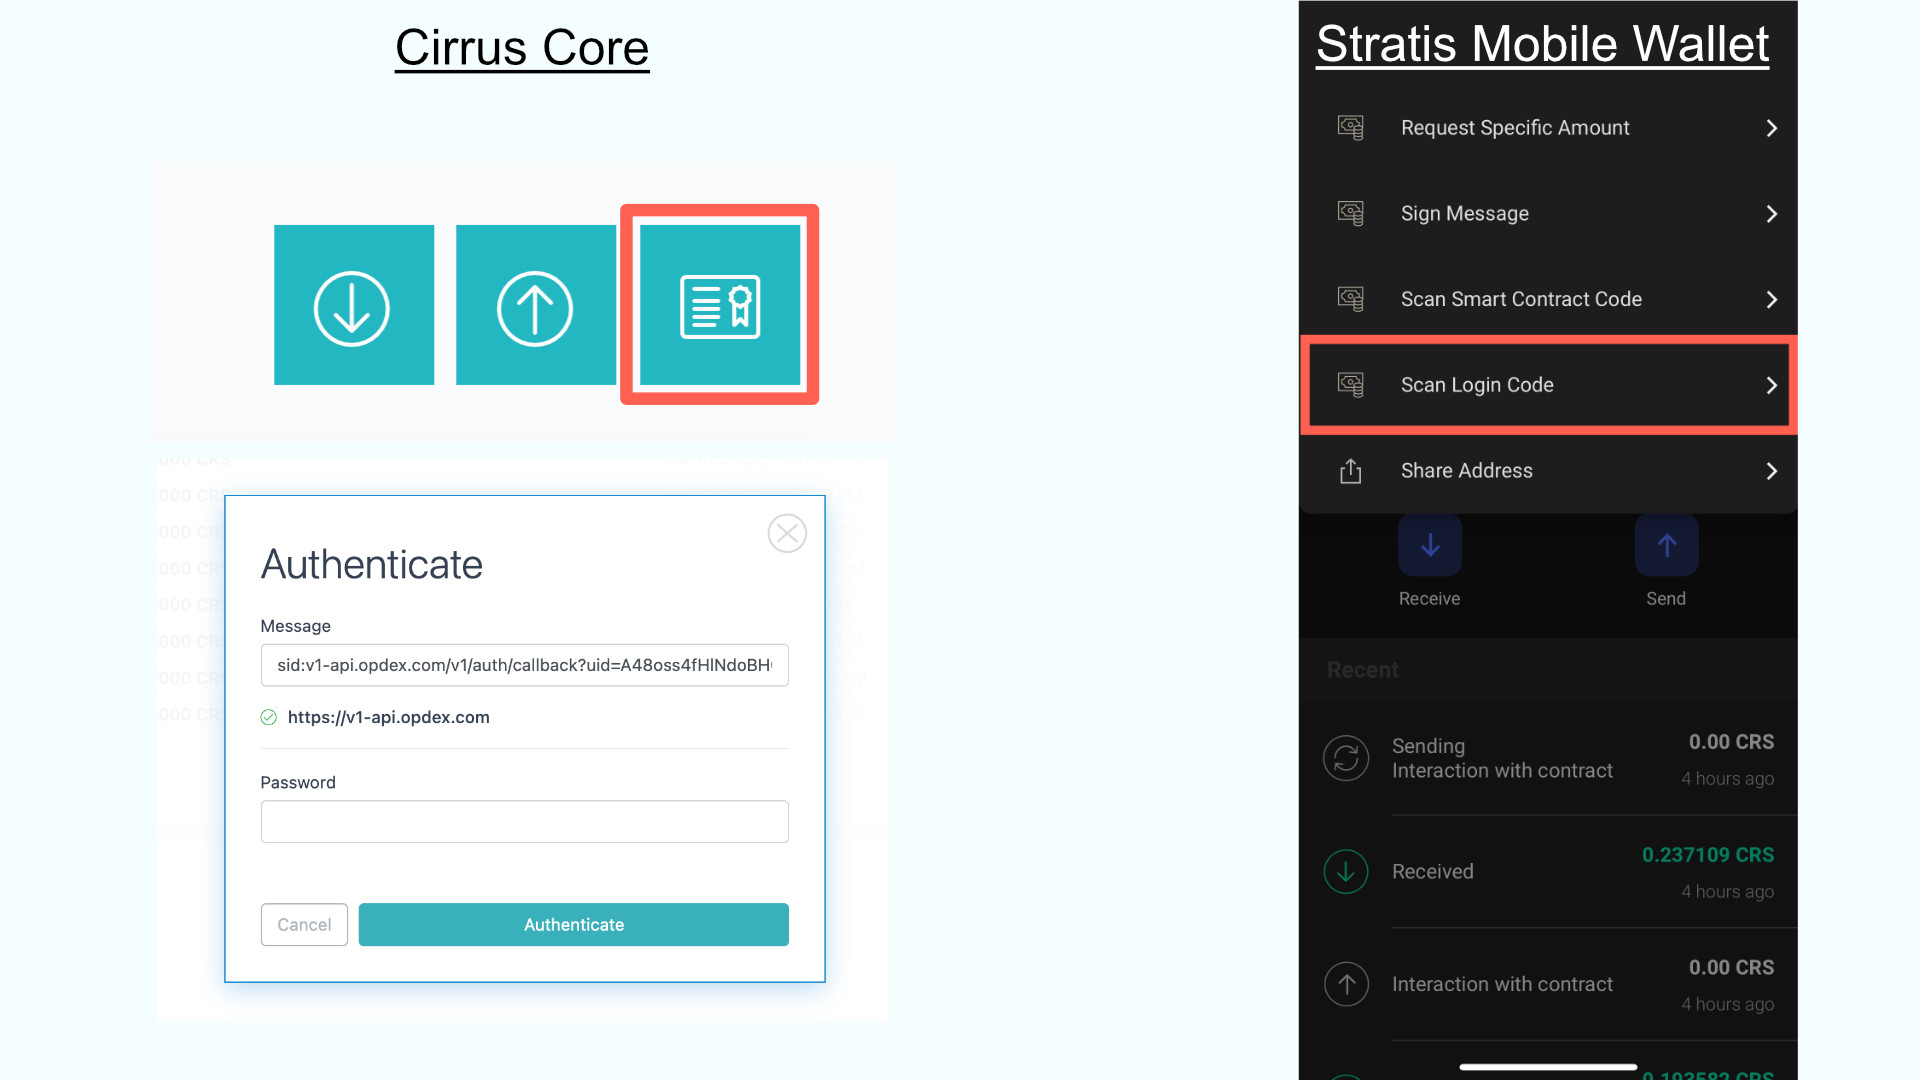 Cirrus Core and Stratis Mobile Wallet login views